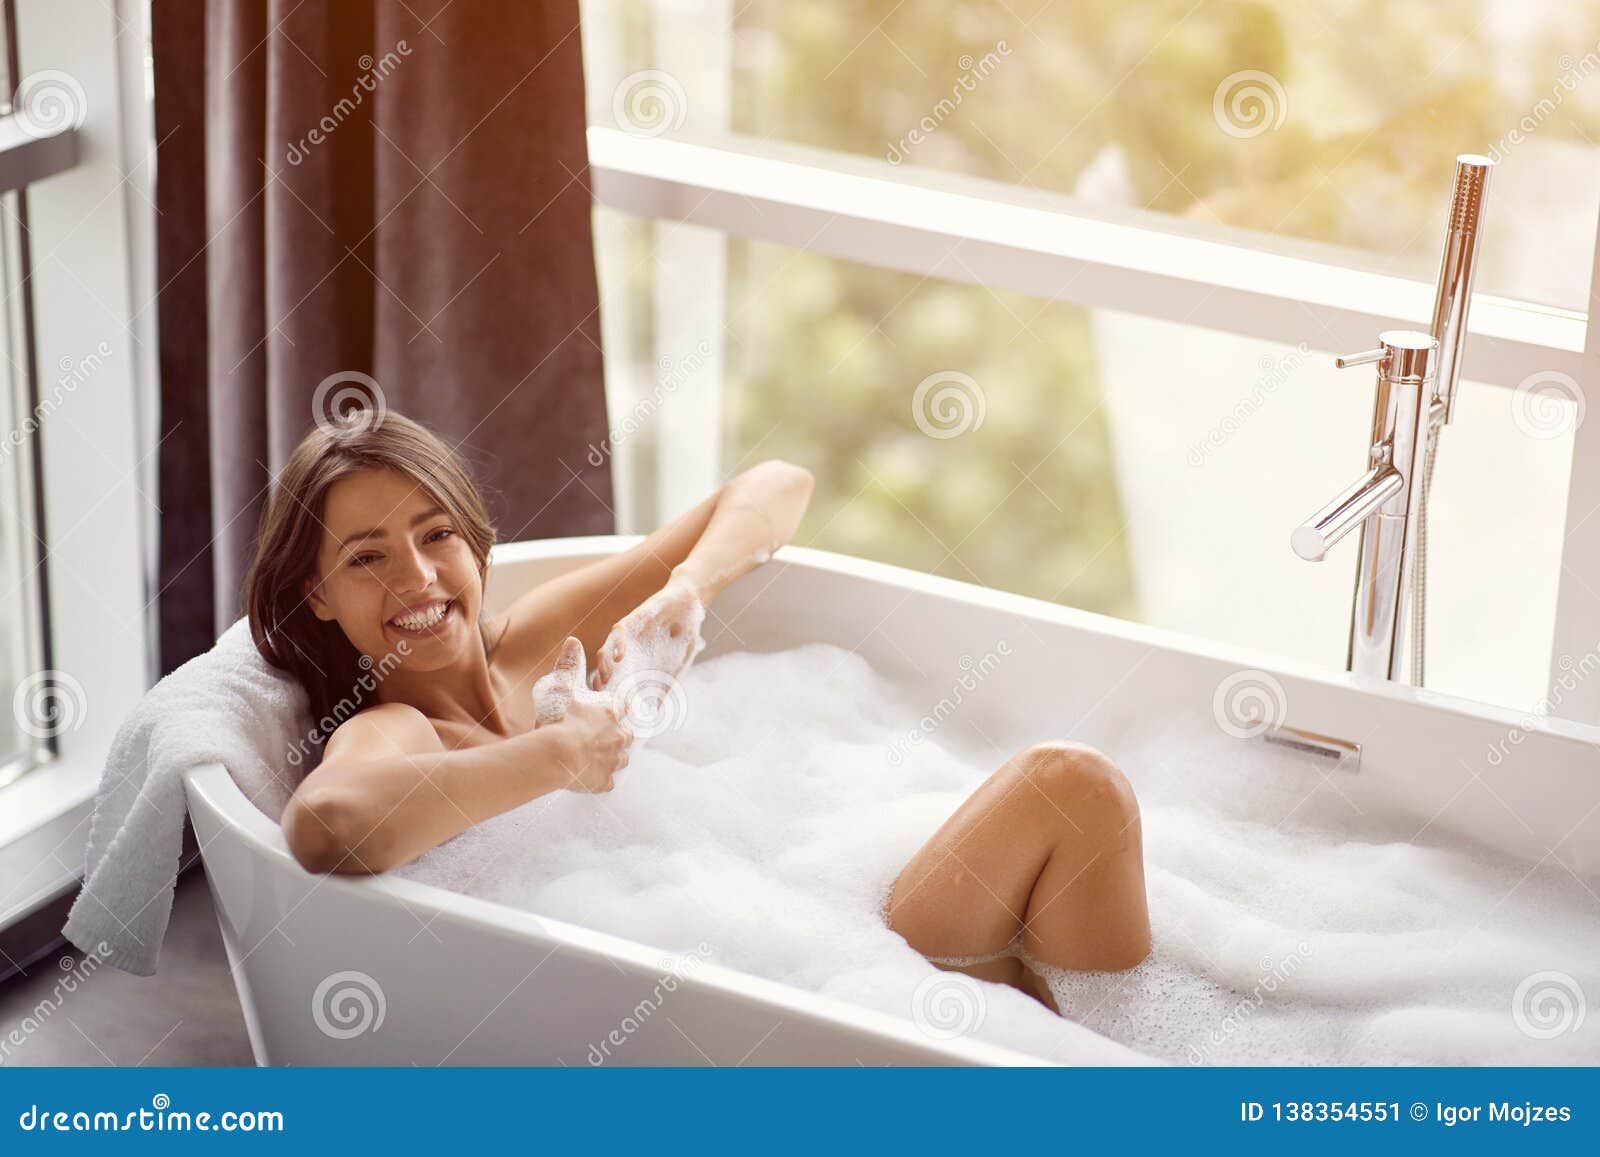 Portrait Of Beautiful Woman Relaxing In Bath With Foam Stock Image Image Of Luxury Bathroom 